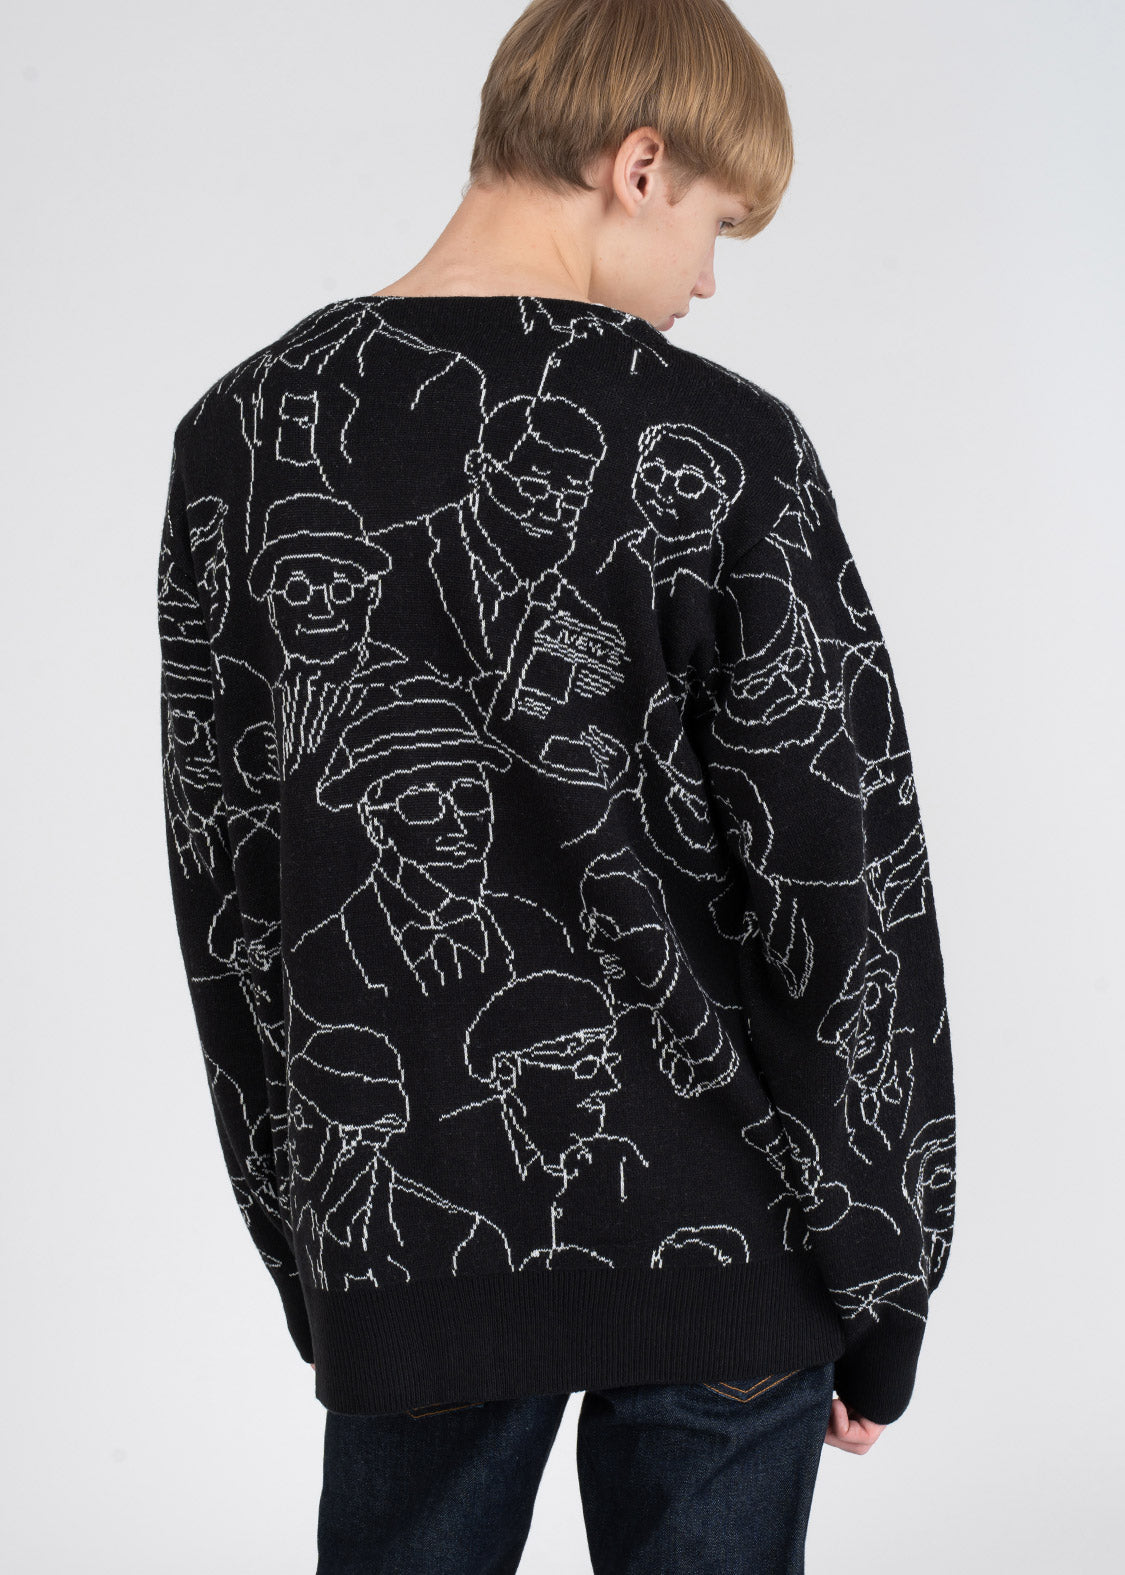 Graphic Jacquard V Neck Knit Cardigan (Nice Middle-aged Men)